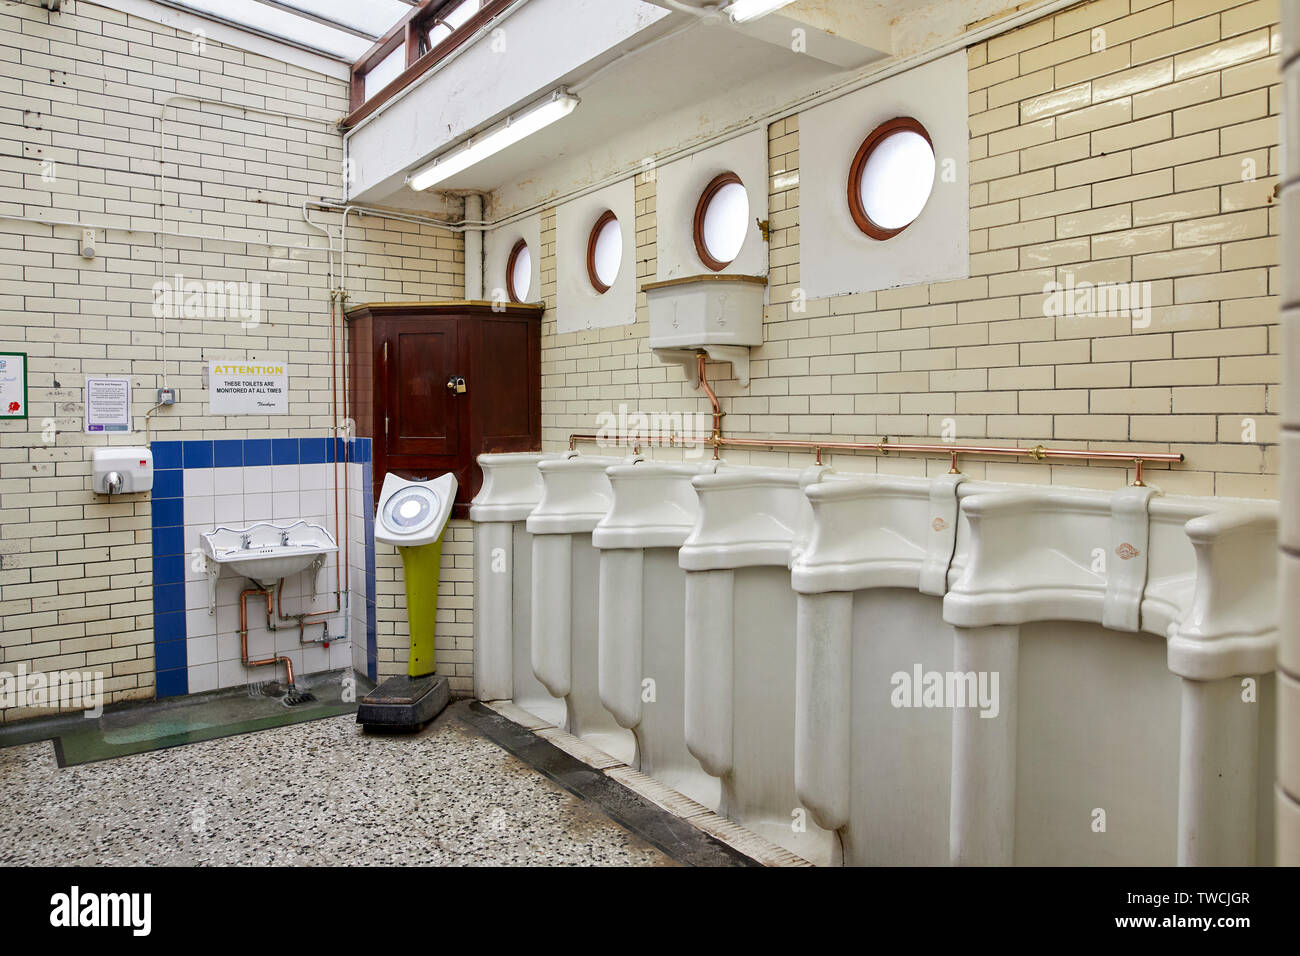 Kingston upon Hull, free victorian mens public toilet interior tiled walls and urinals Stock Photo